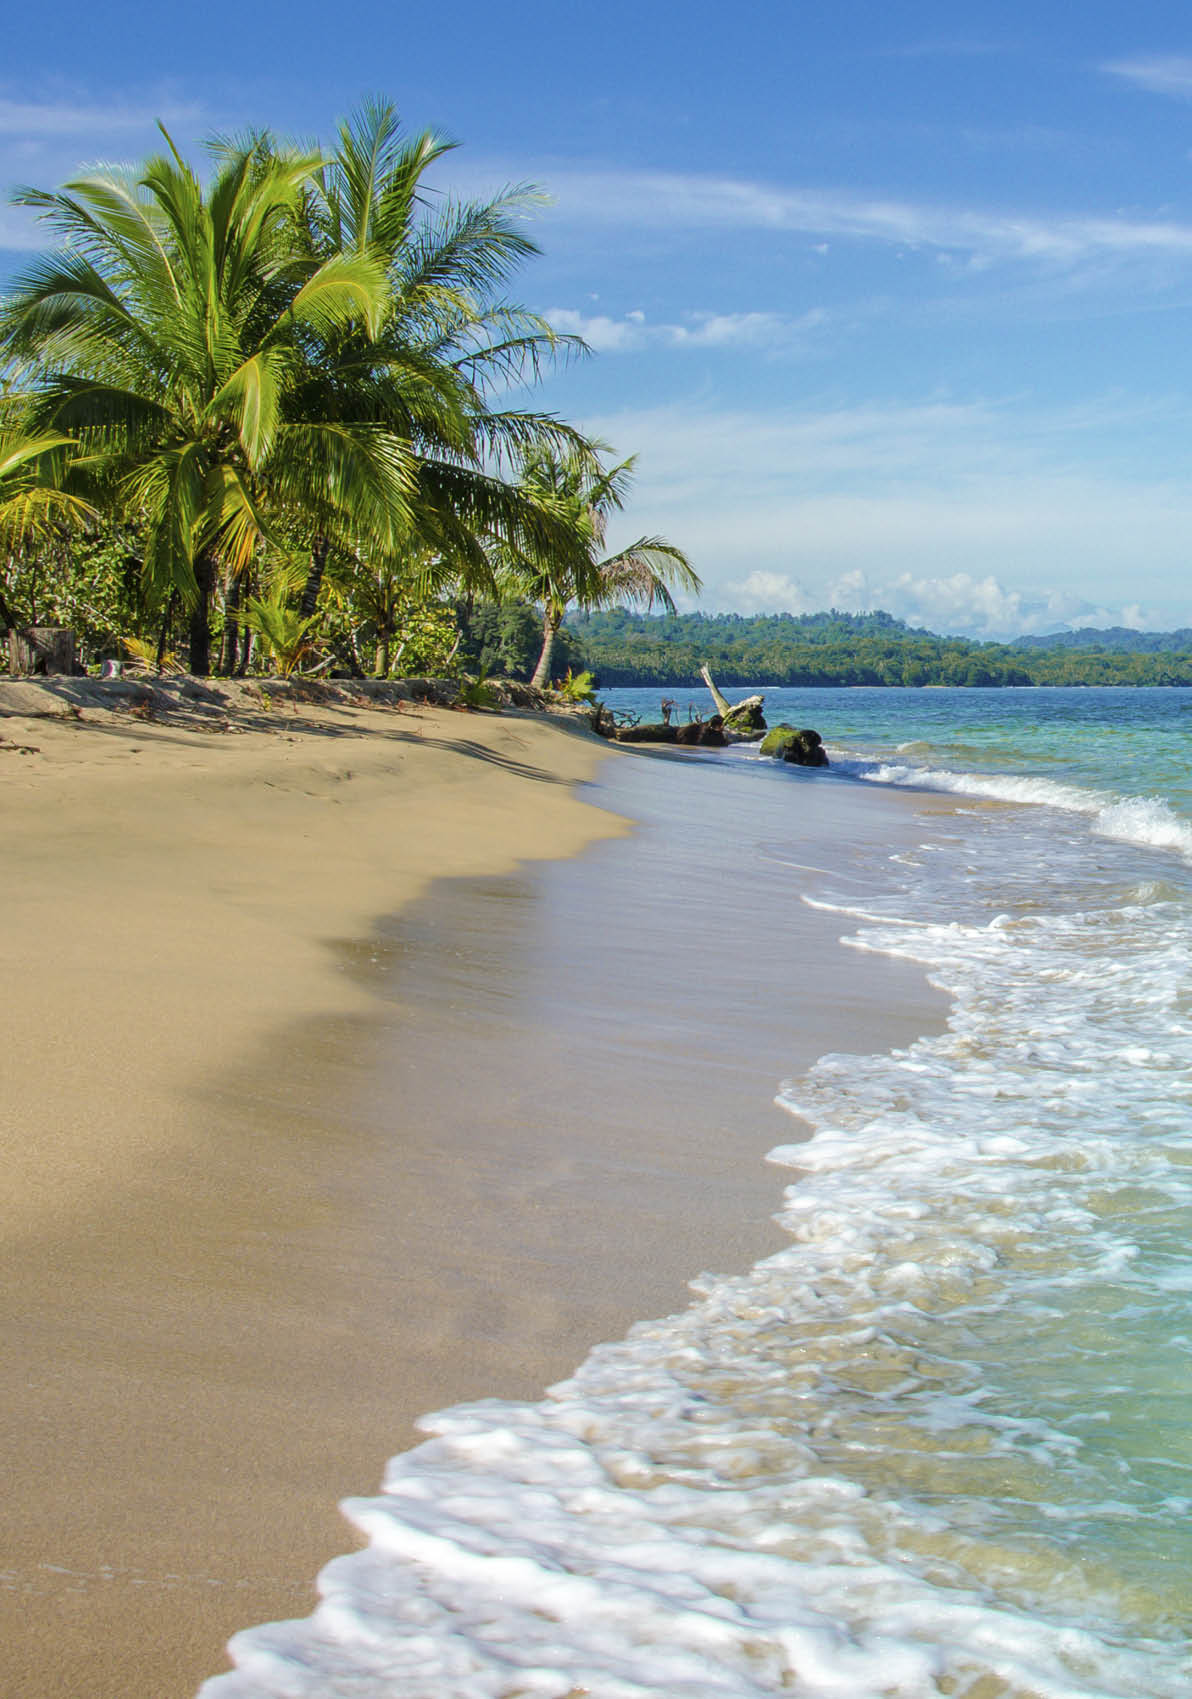 Wild beautiful beach in the caribbean of Costa Rica -  close to Puerto Viejo, Manzanillo, Cocles